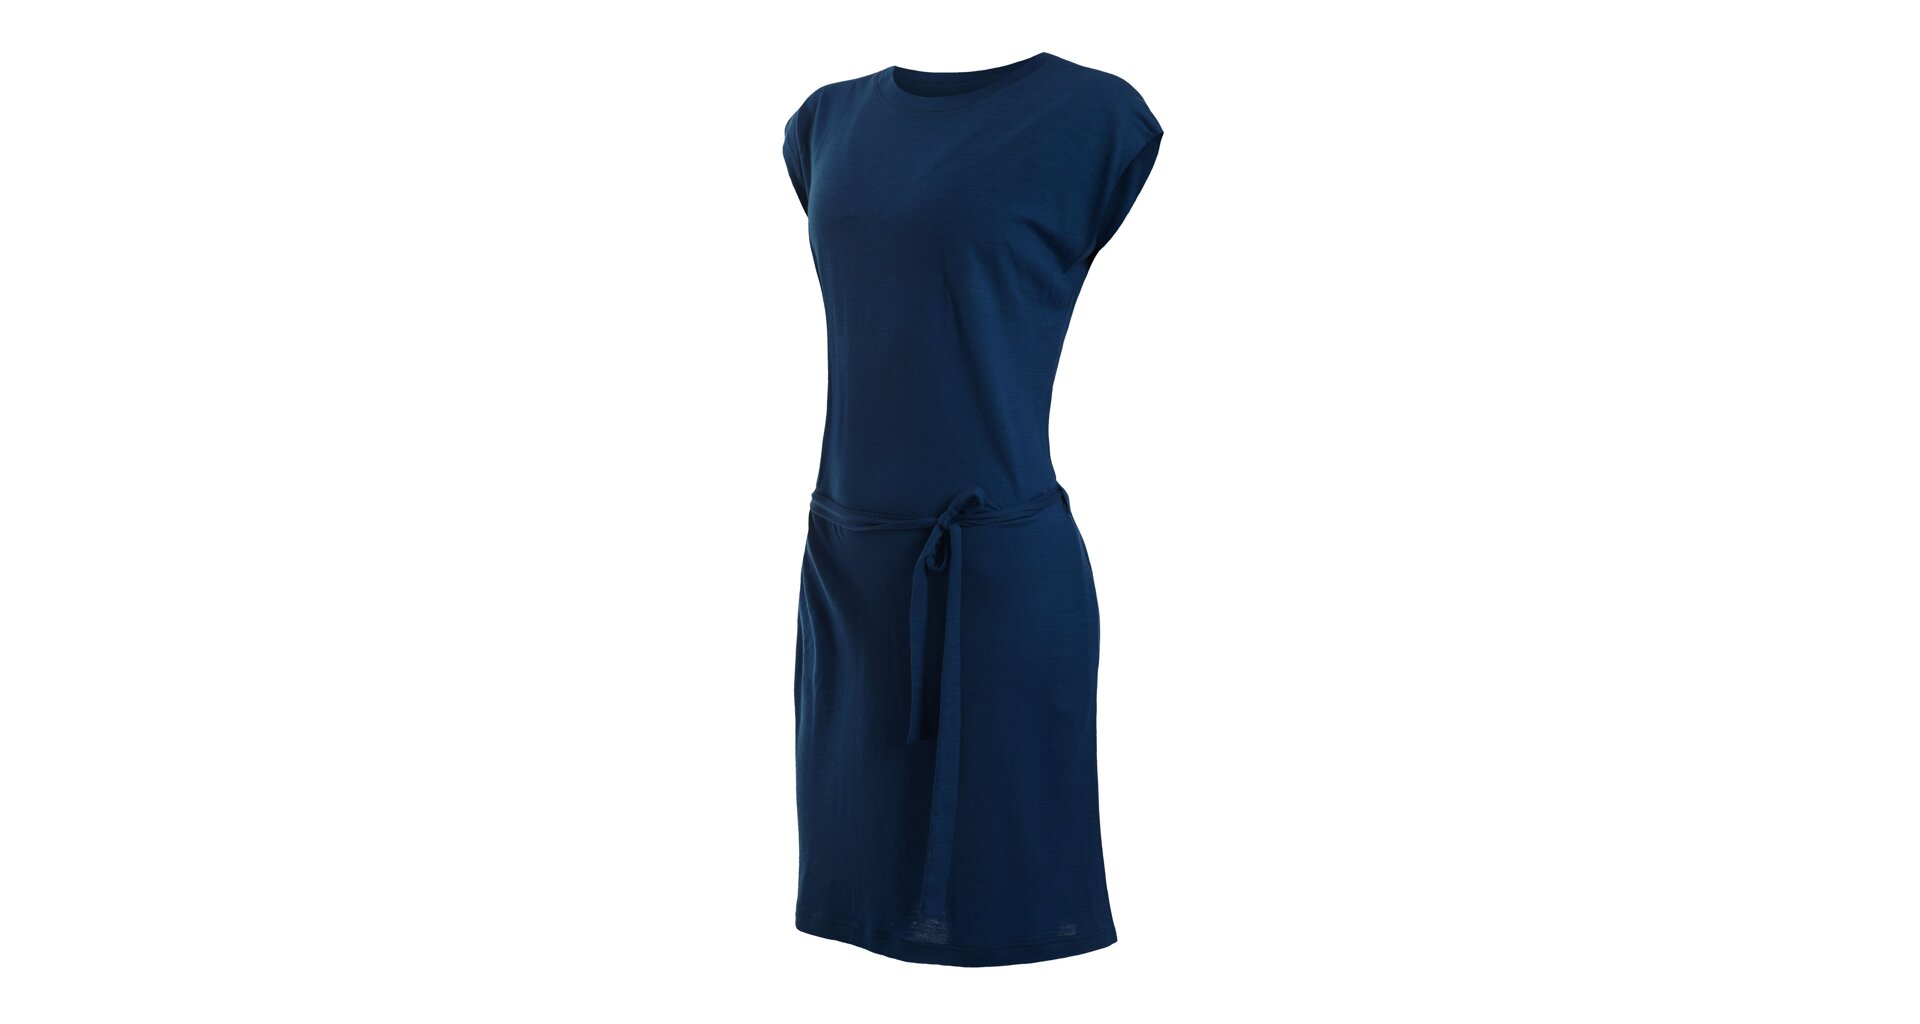 SENSOR MERINO ACTIVE dámské šaty deep blue Velikost: S